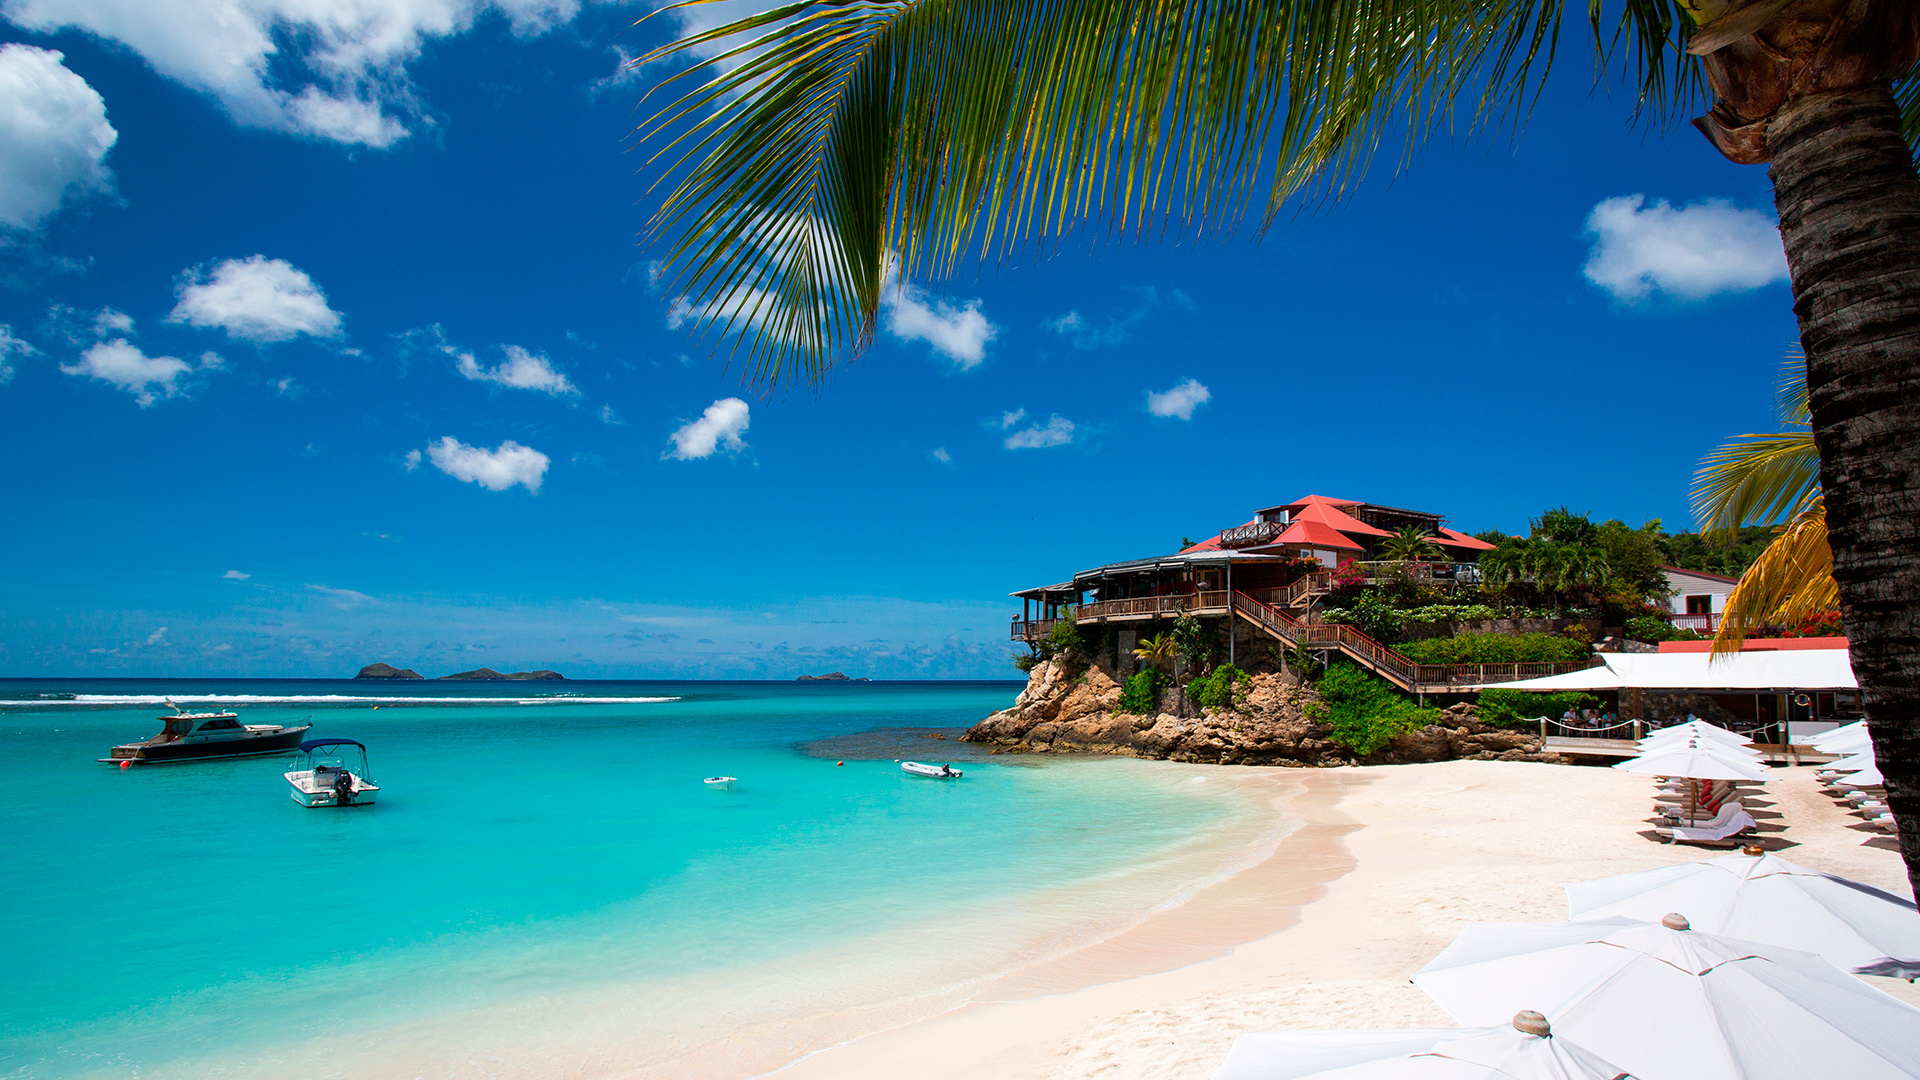 Eden Rock St Barths, Prestigious resort, Caribbean luxury, World-class amenities, 1920x1080 Full HD Desktop